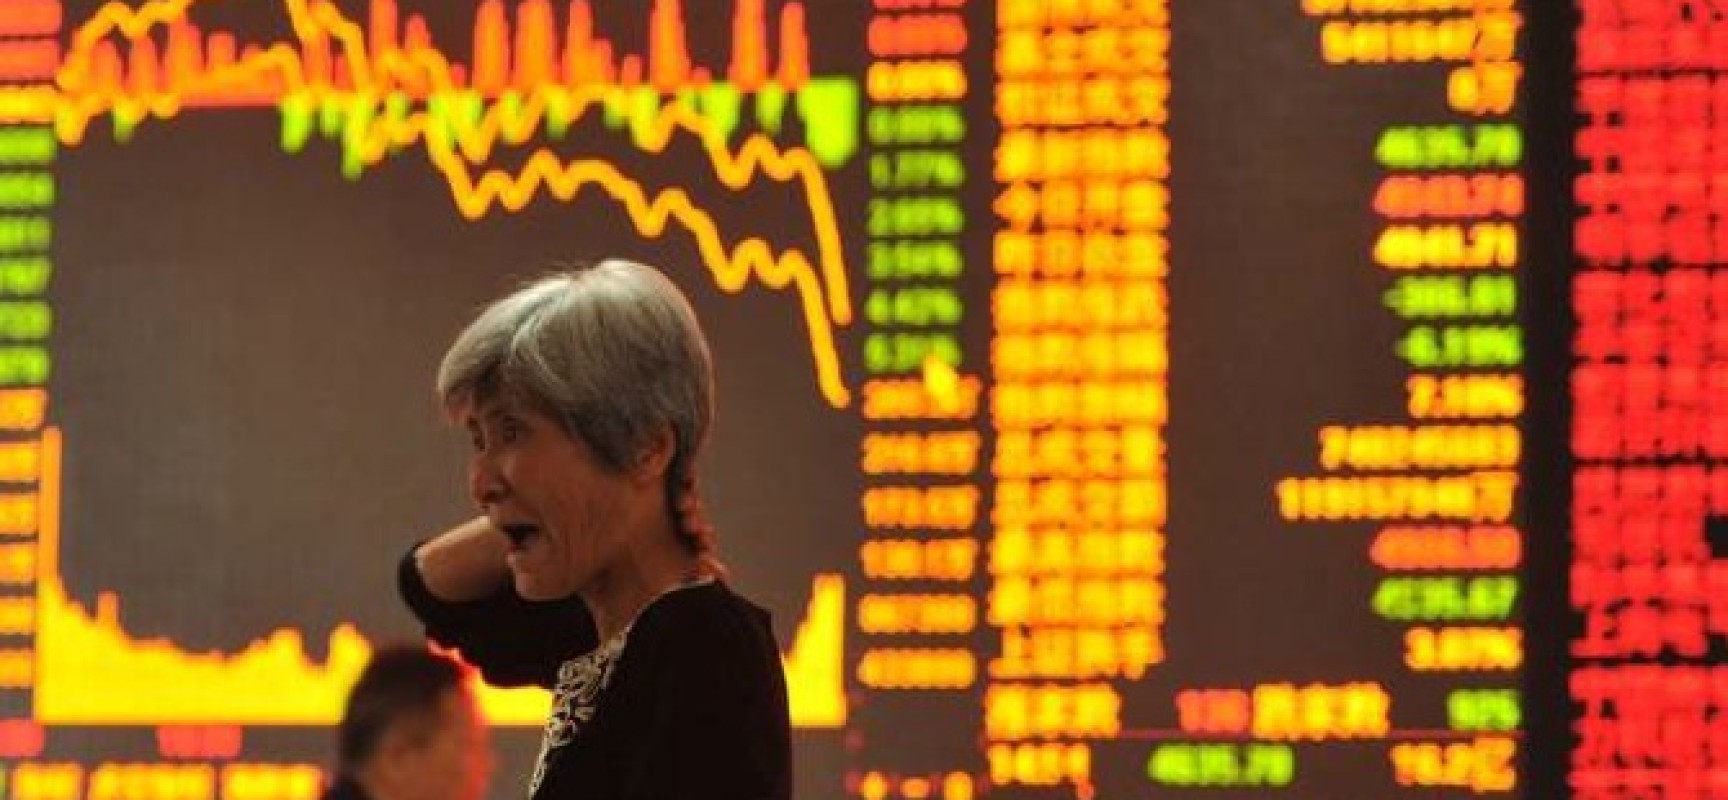 stock market trading halted